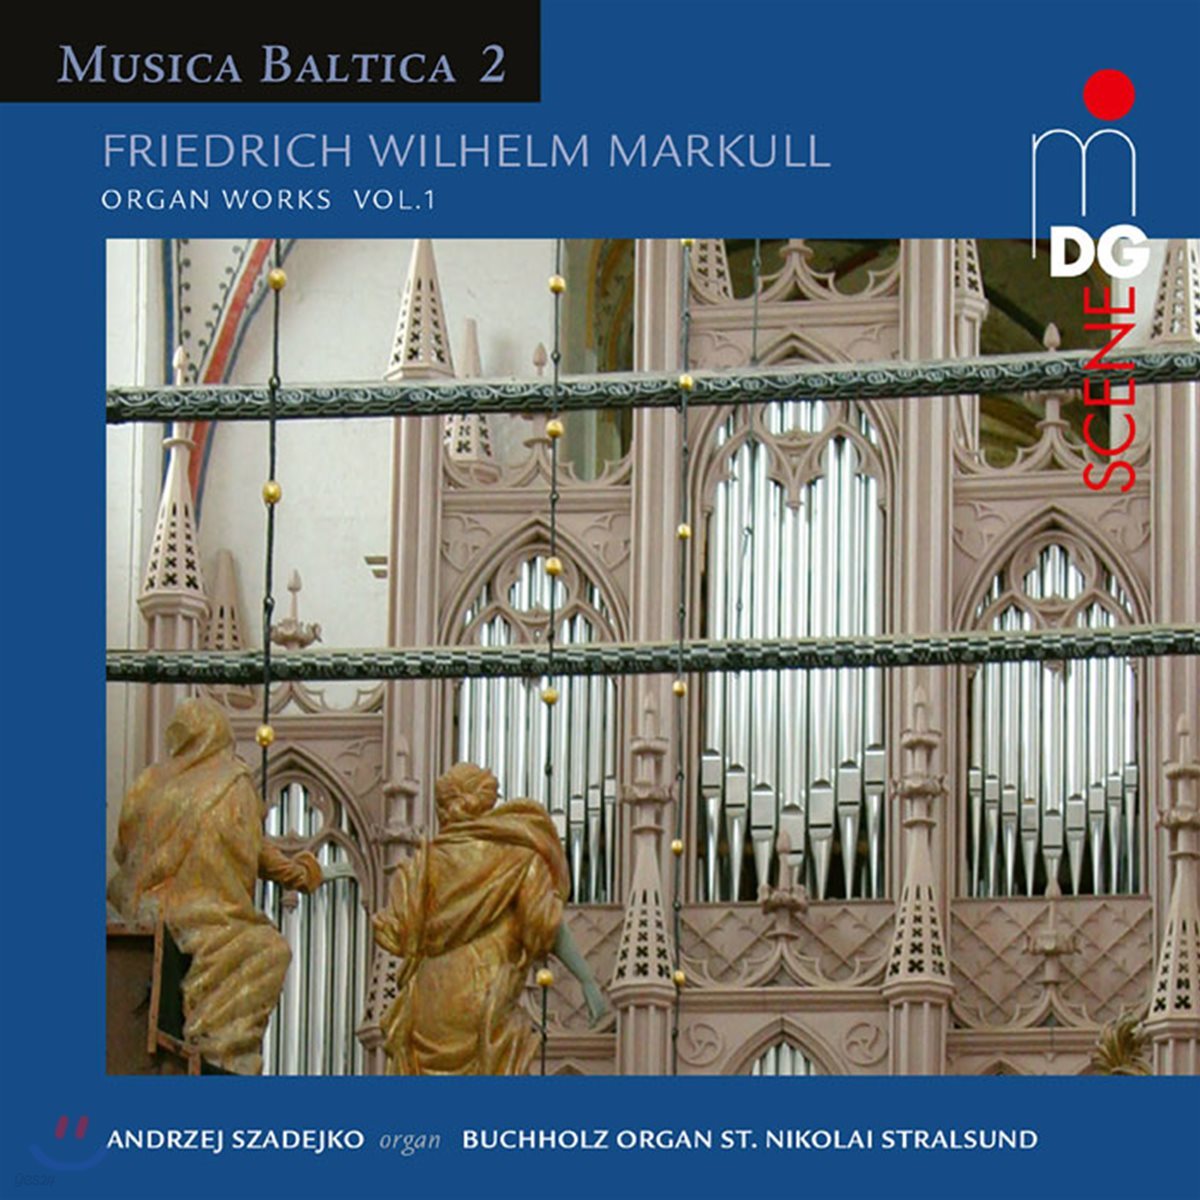 Andrzej Szadejko 프리드리히 빌헬름 마컬: 오르간 작품 1집 (Musica Baltica 2 - Friedrich Wilhelm Markull: Organ Works Vol.1)